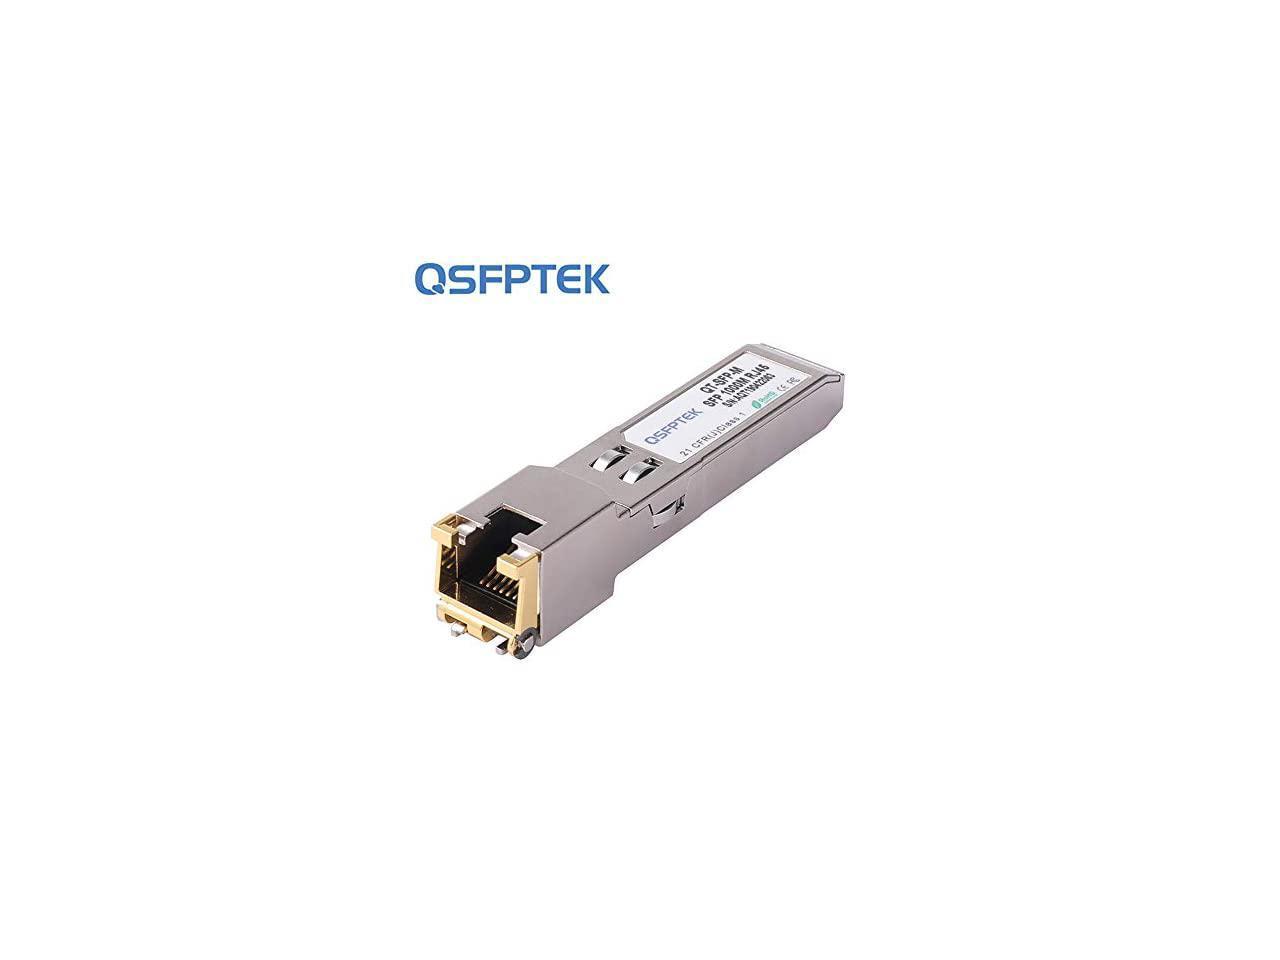 Gigabit SFP Copper RJ45 Module Mini GBIC 1000BASE-T Transceiver for Cisco  GLC-T/SFP-GE-T, Ubiquiti UF-RJ45-1G, Netgear, Other Open Switches, up to 